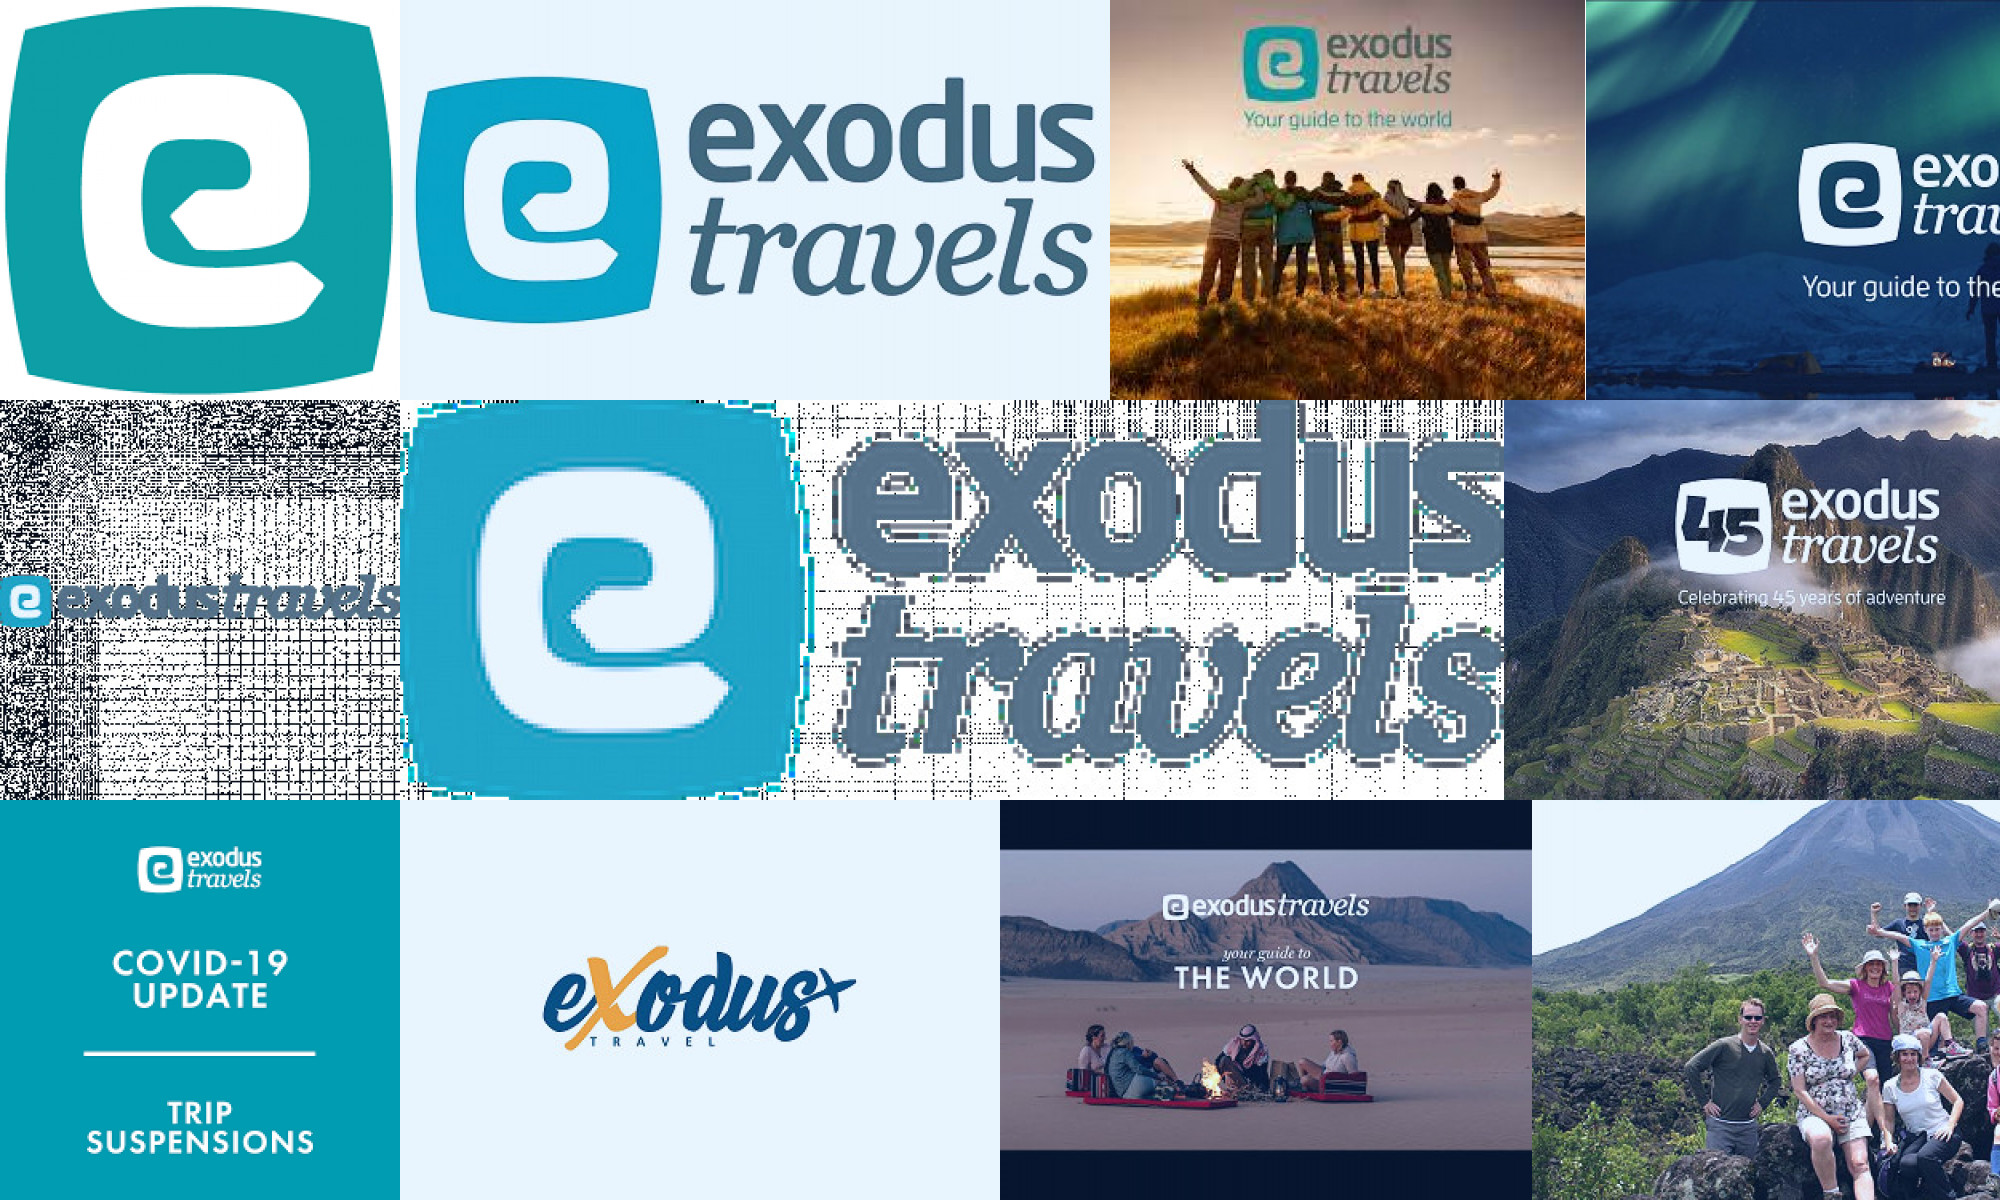 exodus travels